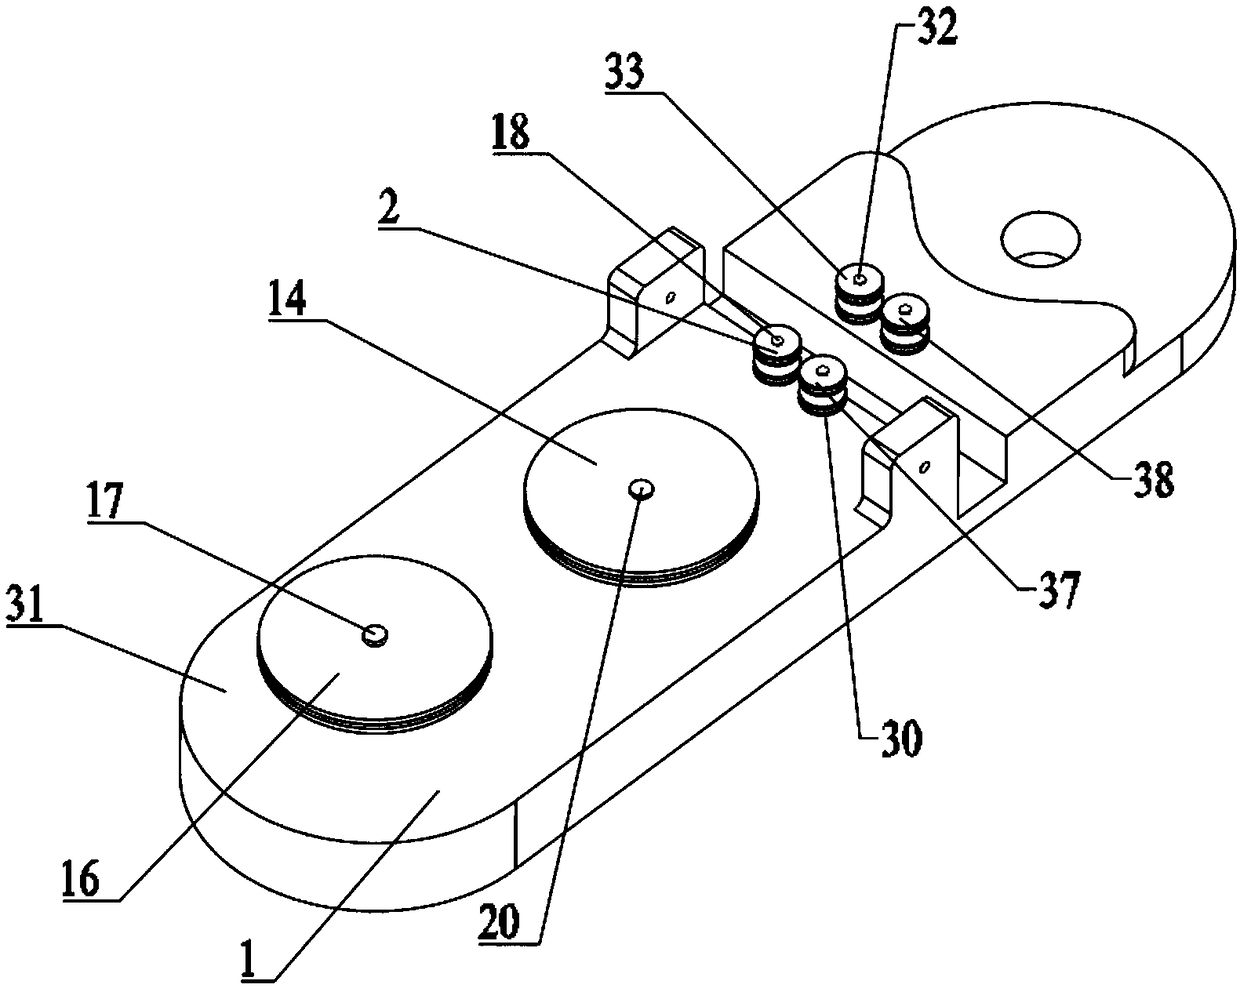 Passive decoupling mechanism for joint movement of tandem rope-driven manipulator